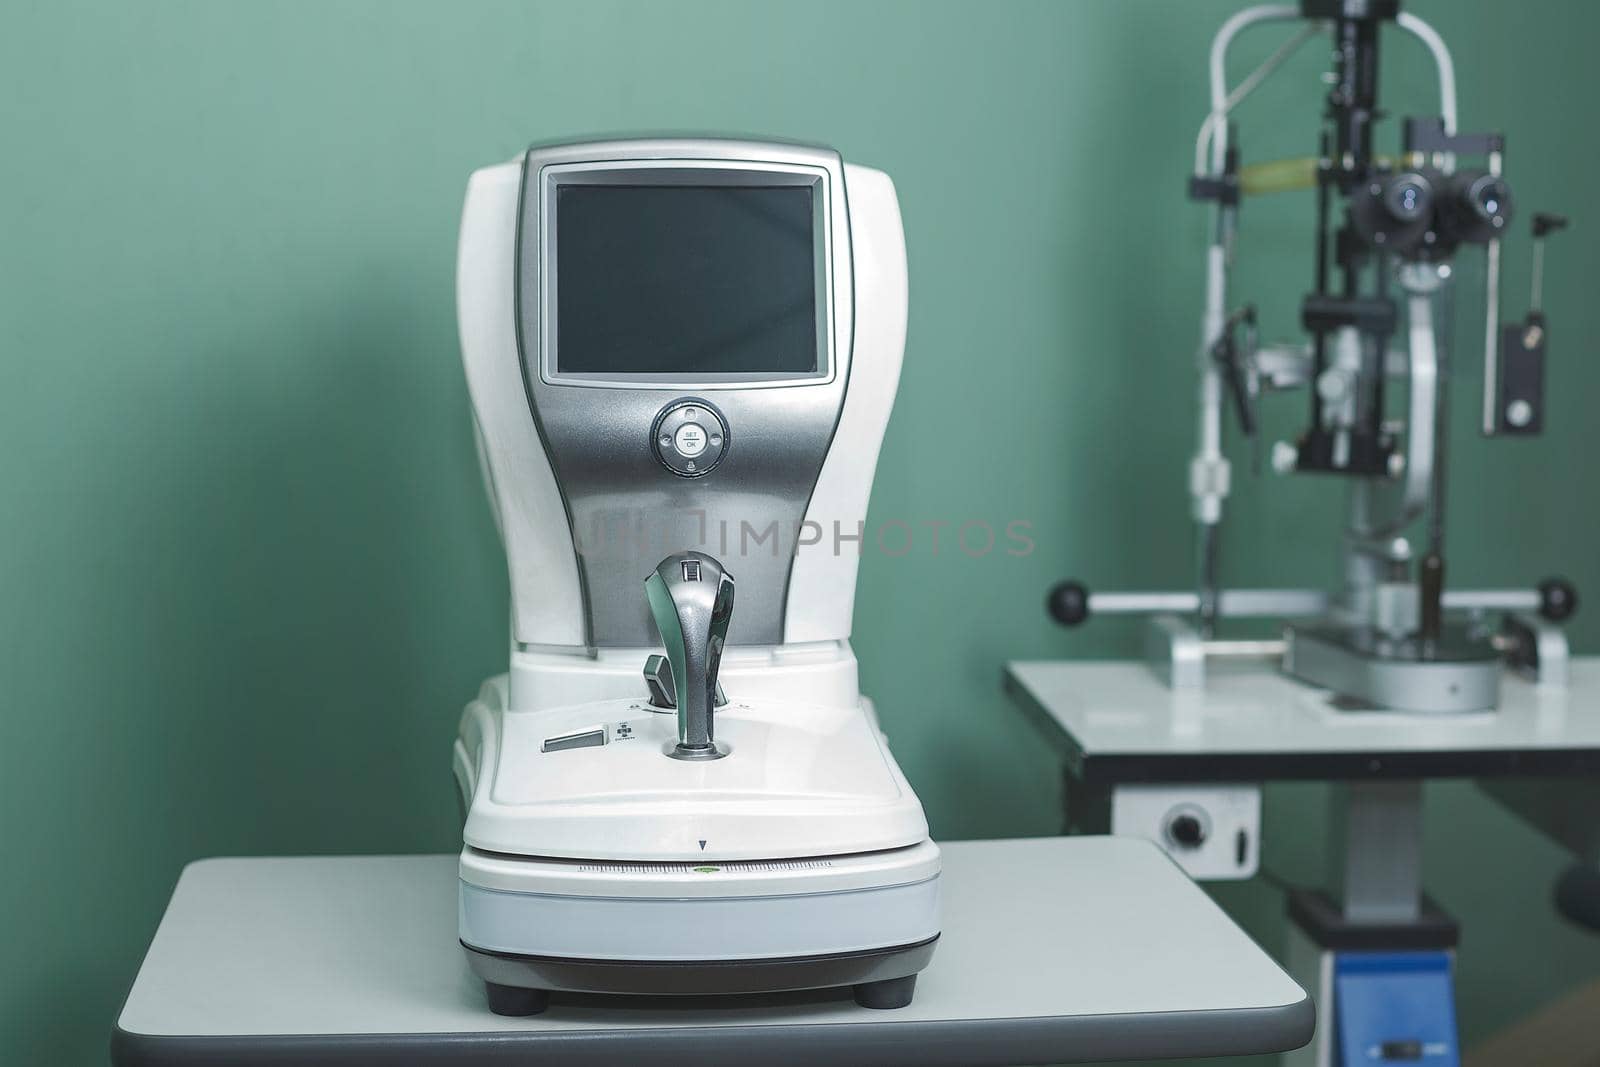 Medical optometrist equipment used for  eye exams by wondry